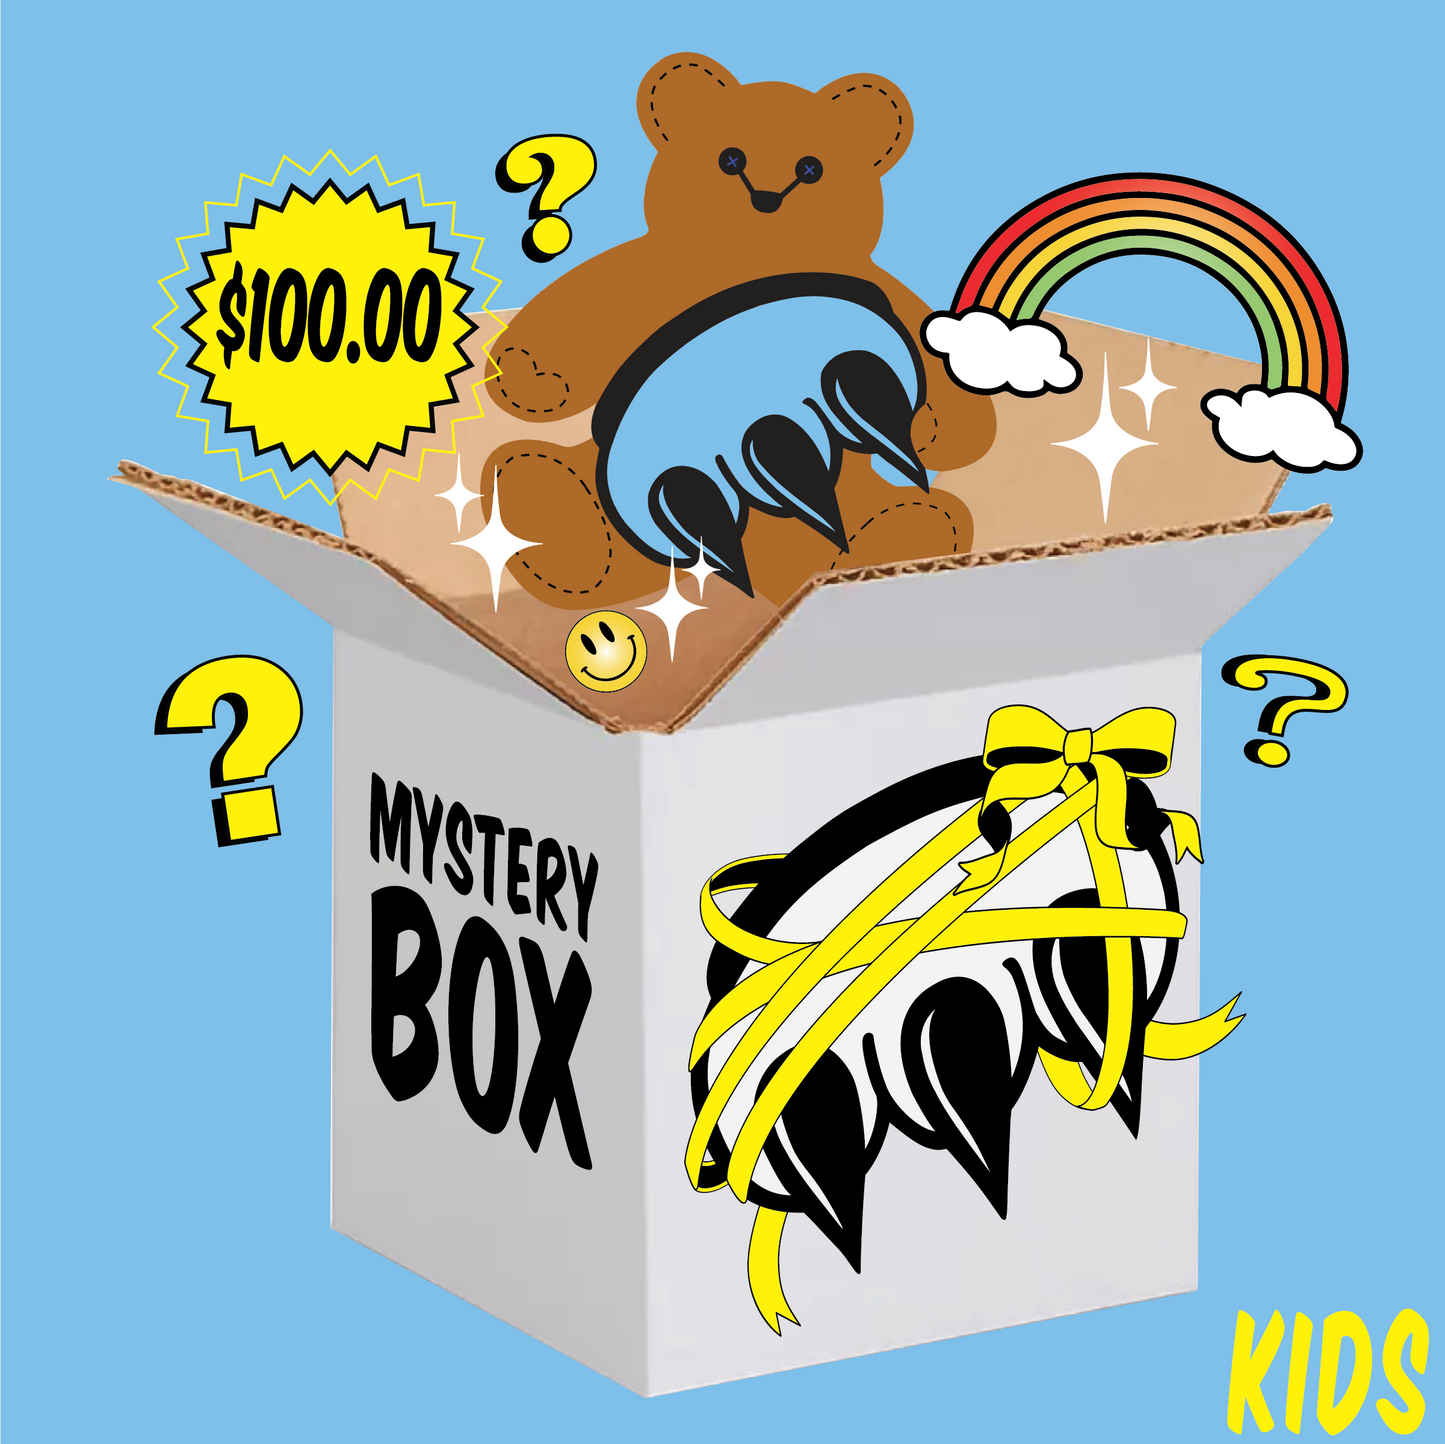 KIDS $100 MYSTERY BOX